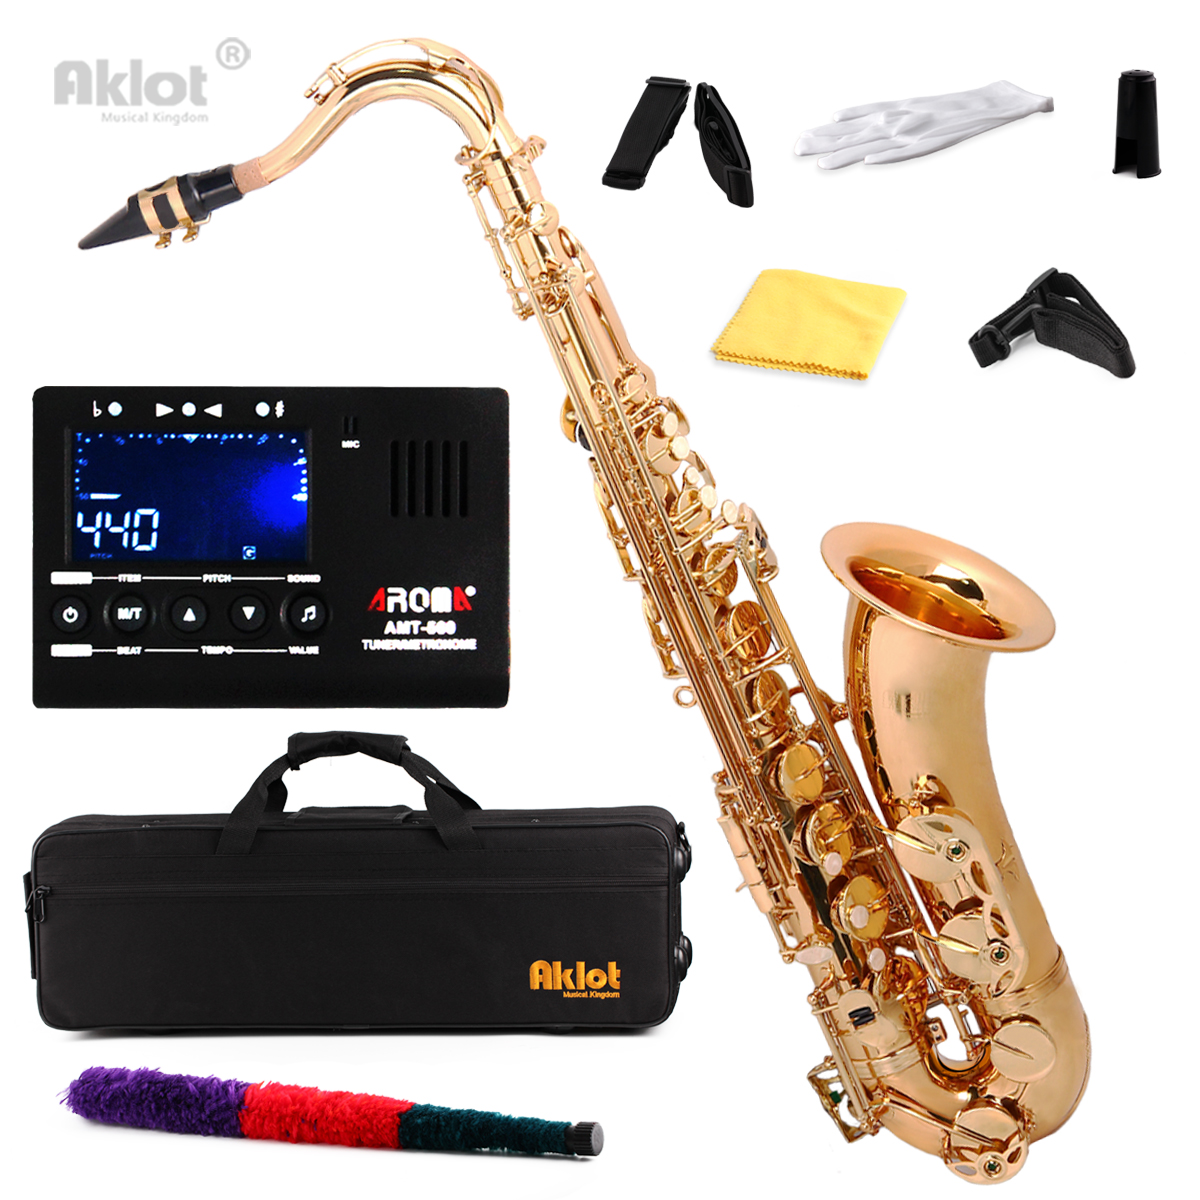 Aklot Bb Gold Beginner Tenor Saxophone Sax Brass Body with Chromatic Tuner